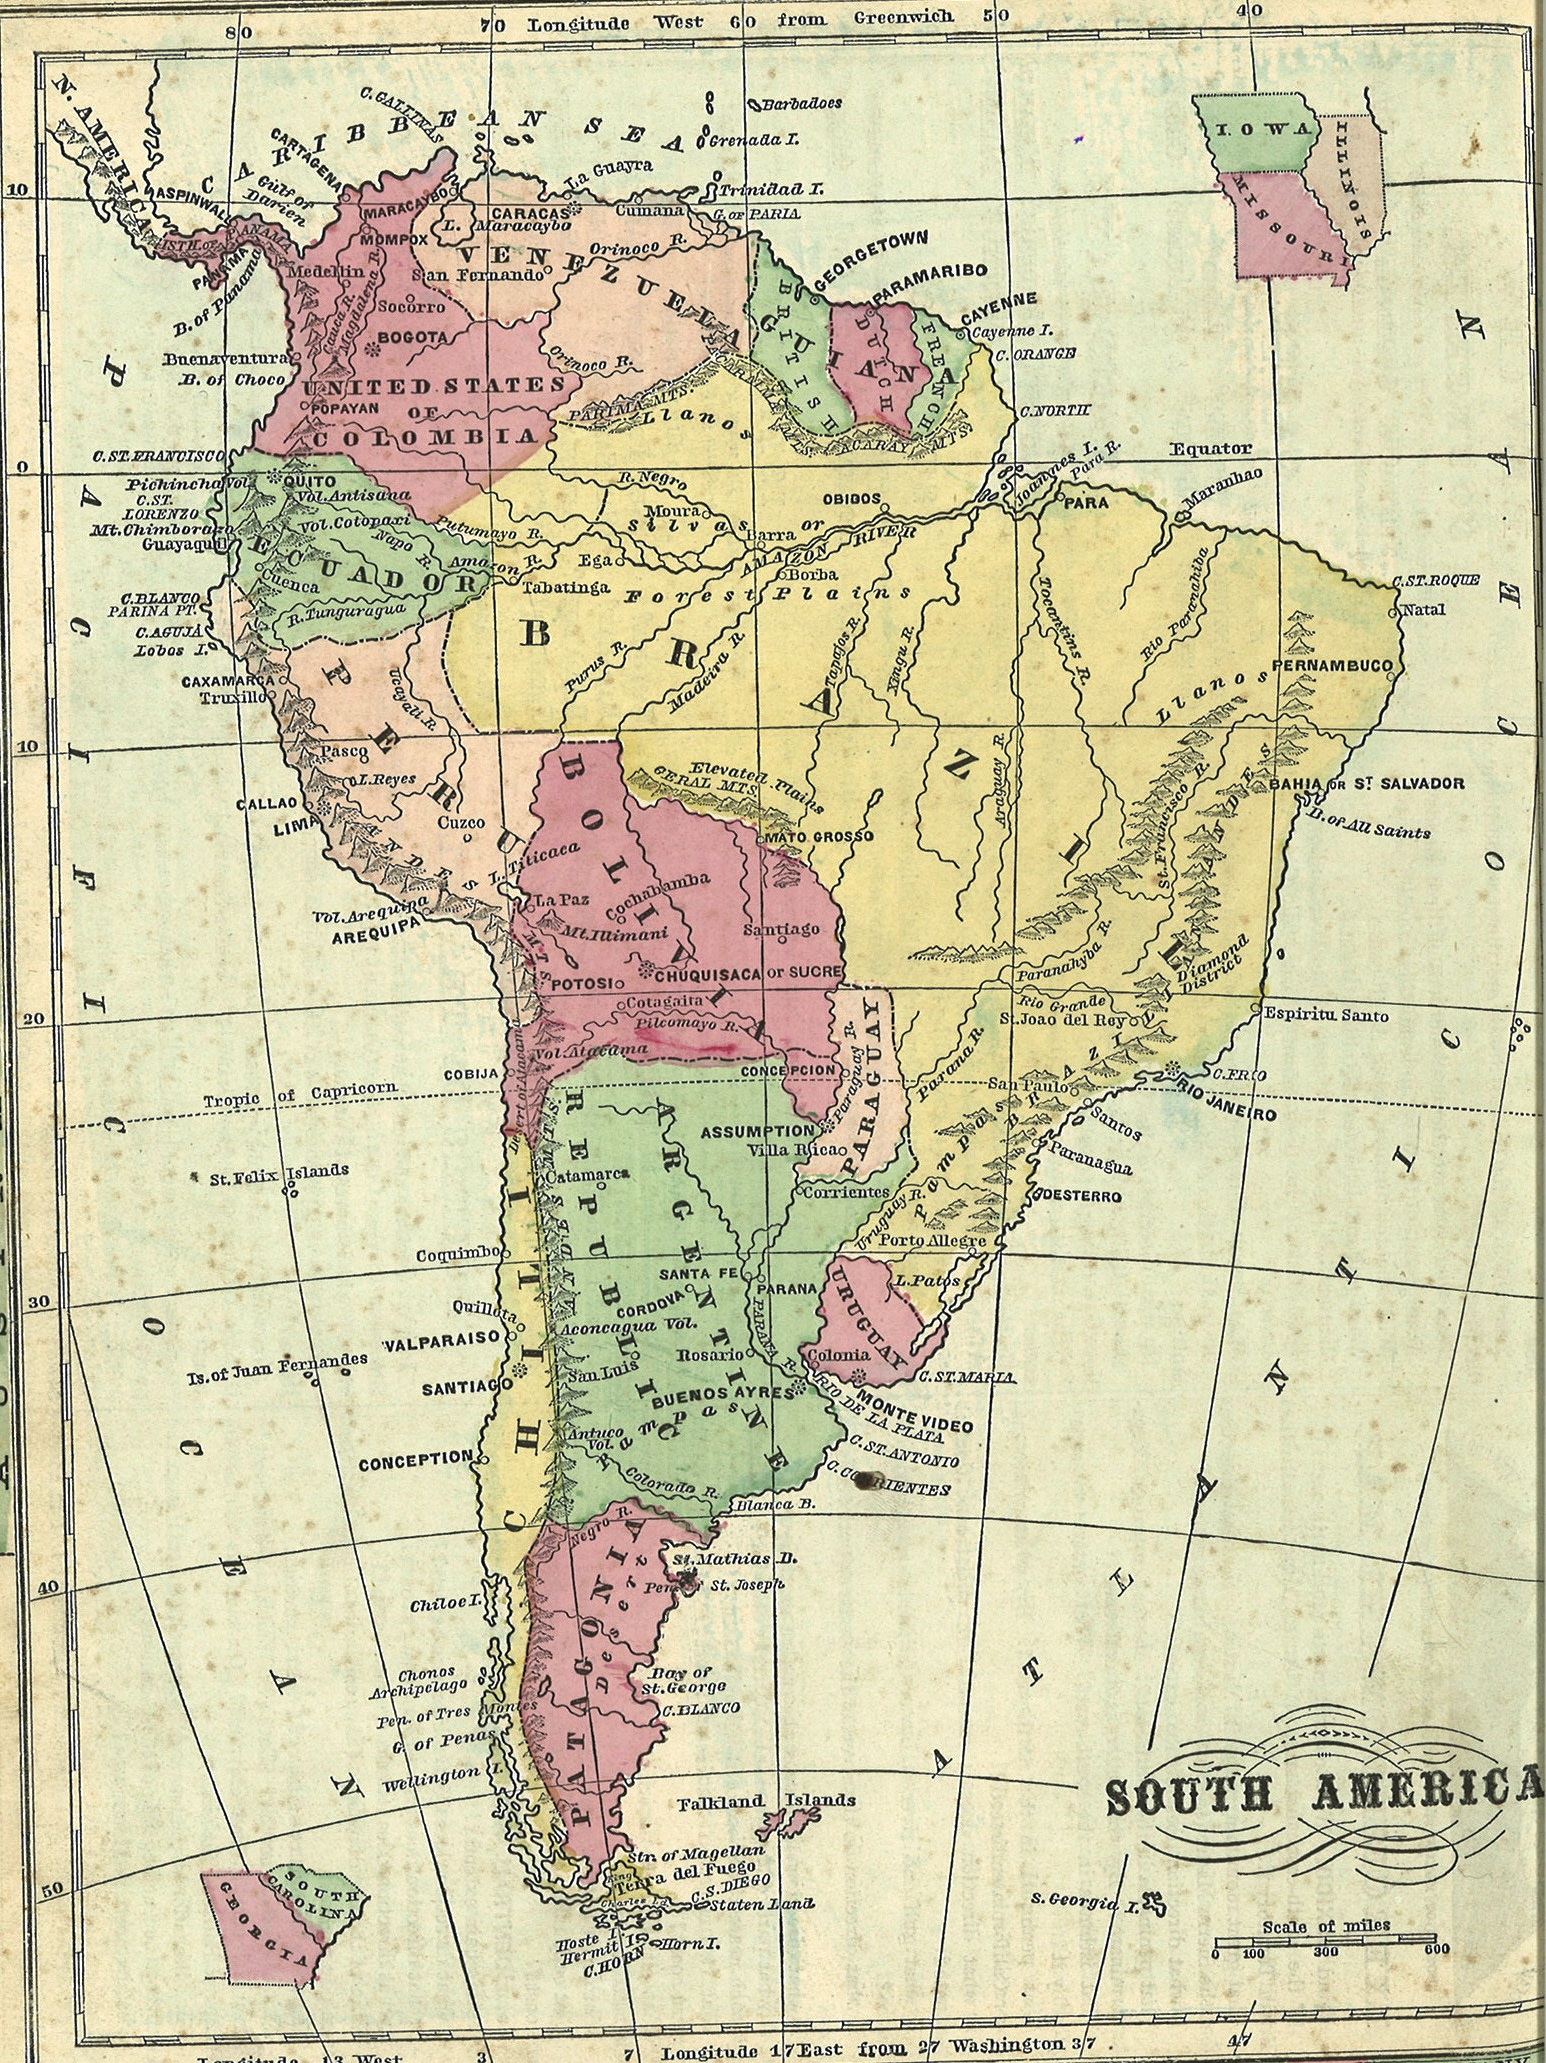 South America's